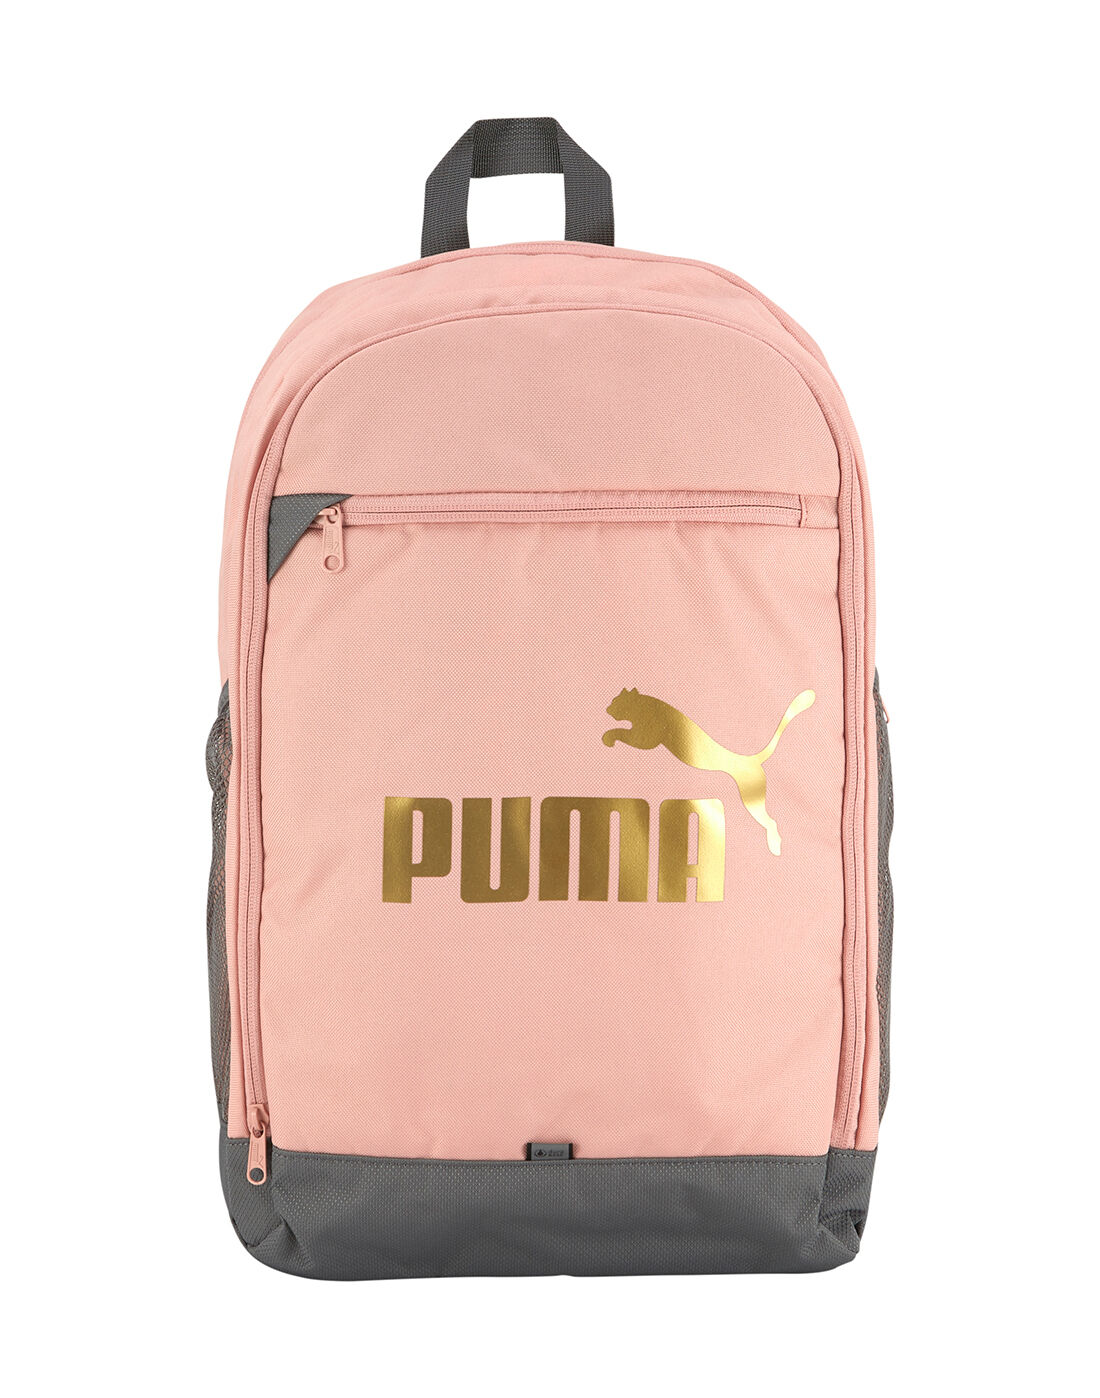 puma school backpack